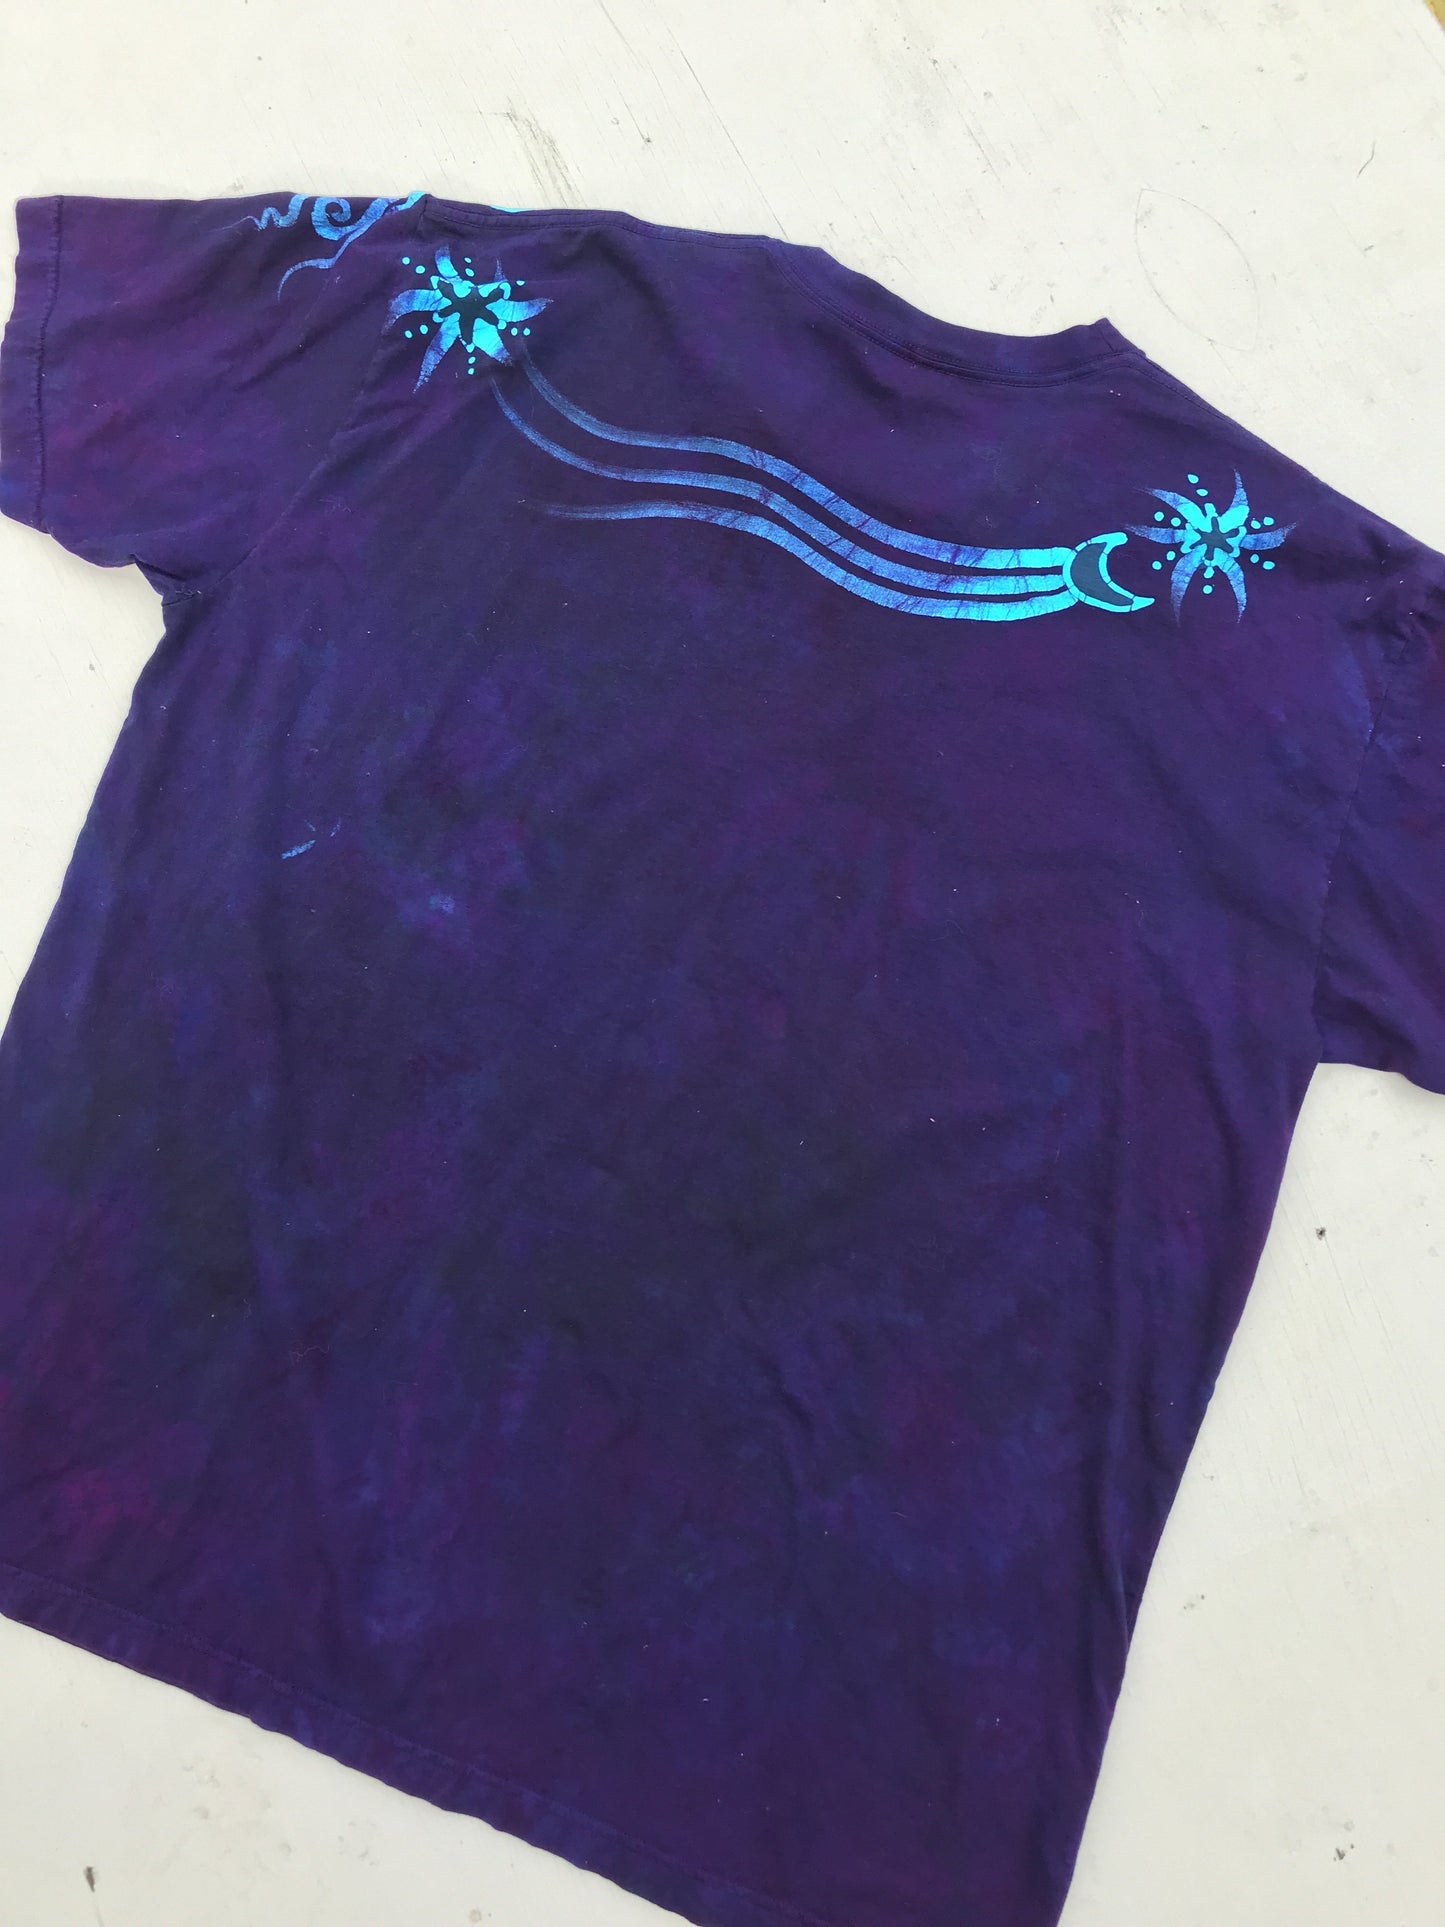 Midnight Moondance Handmade Batik Tshirt - Size 3X - Tall